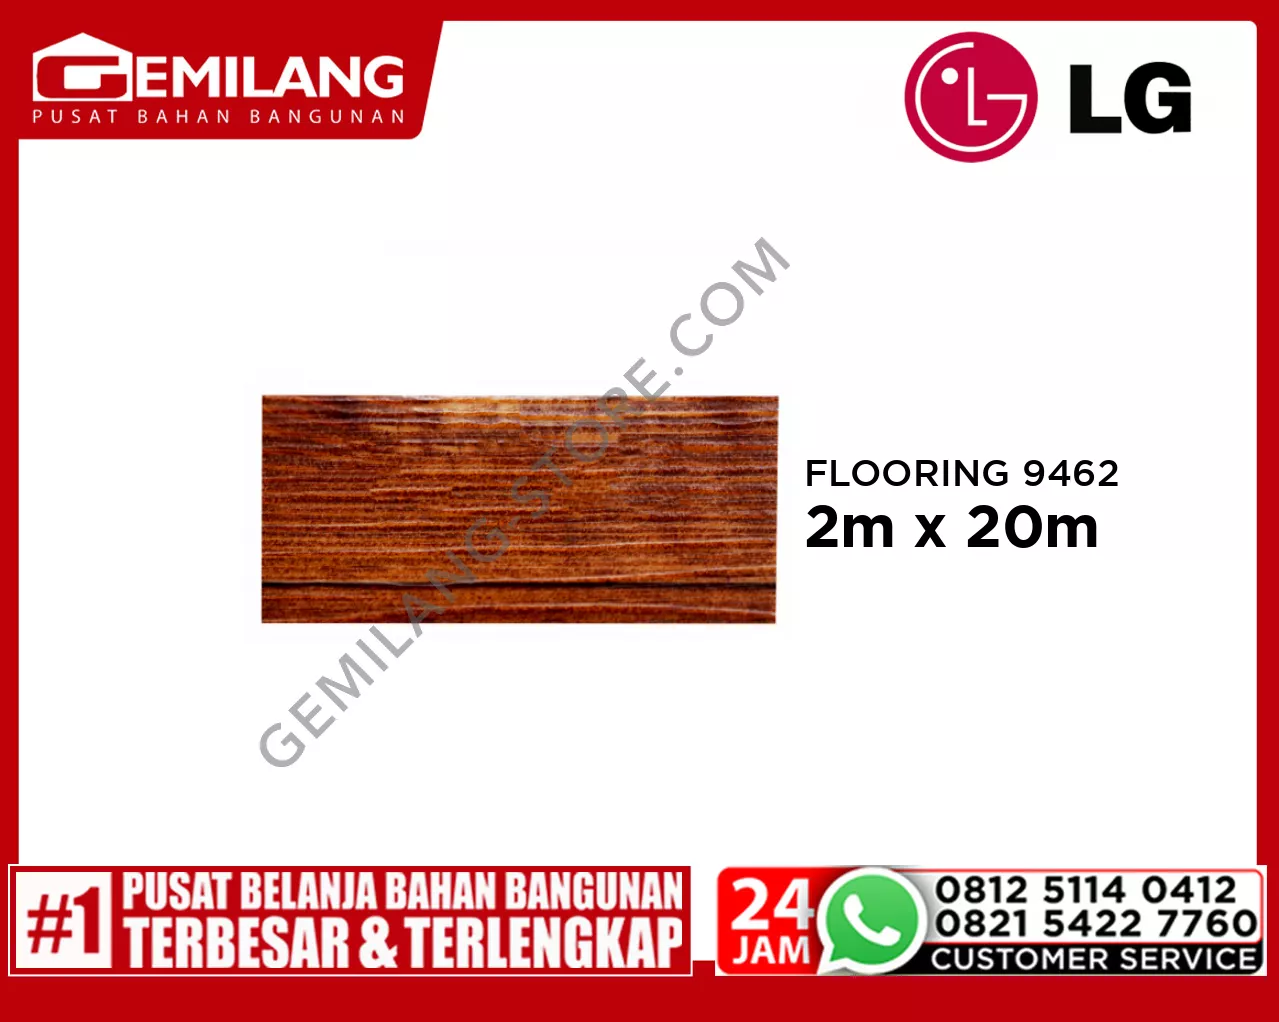 LG FLOORING 9462 SUPREME 1.8mm x 2m x 20m/mtr